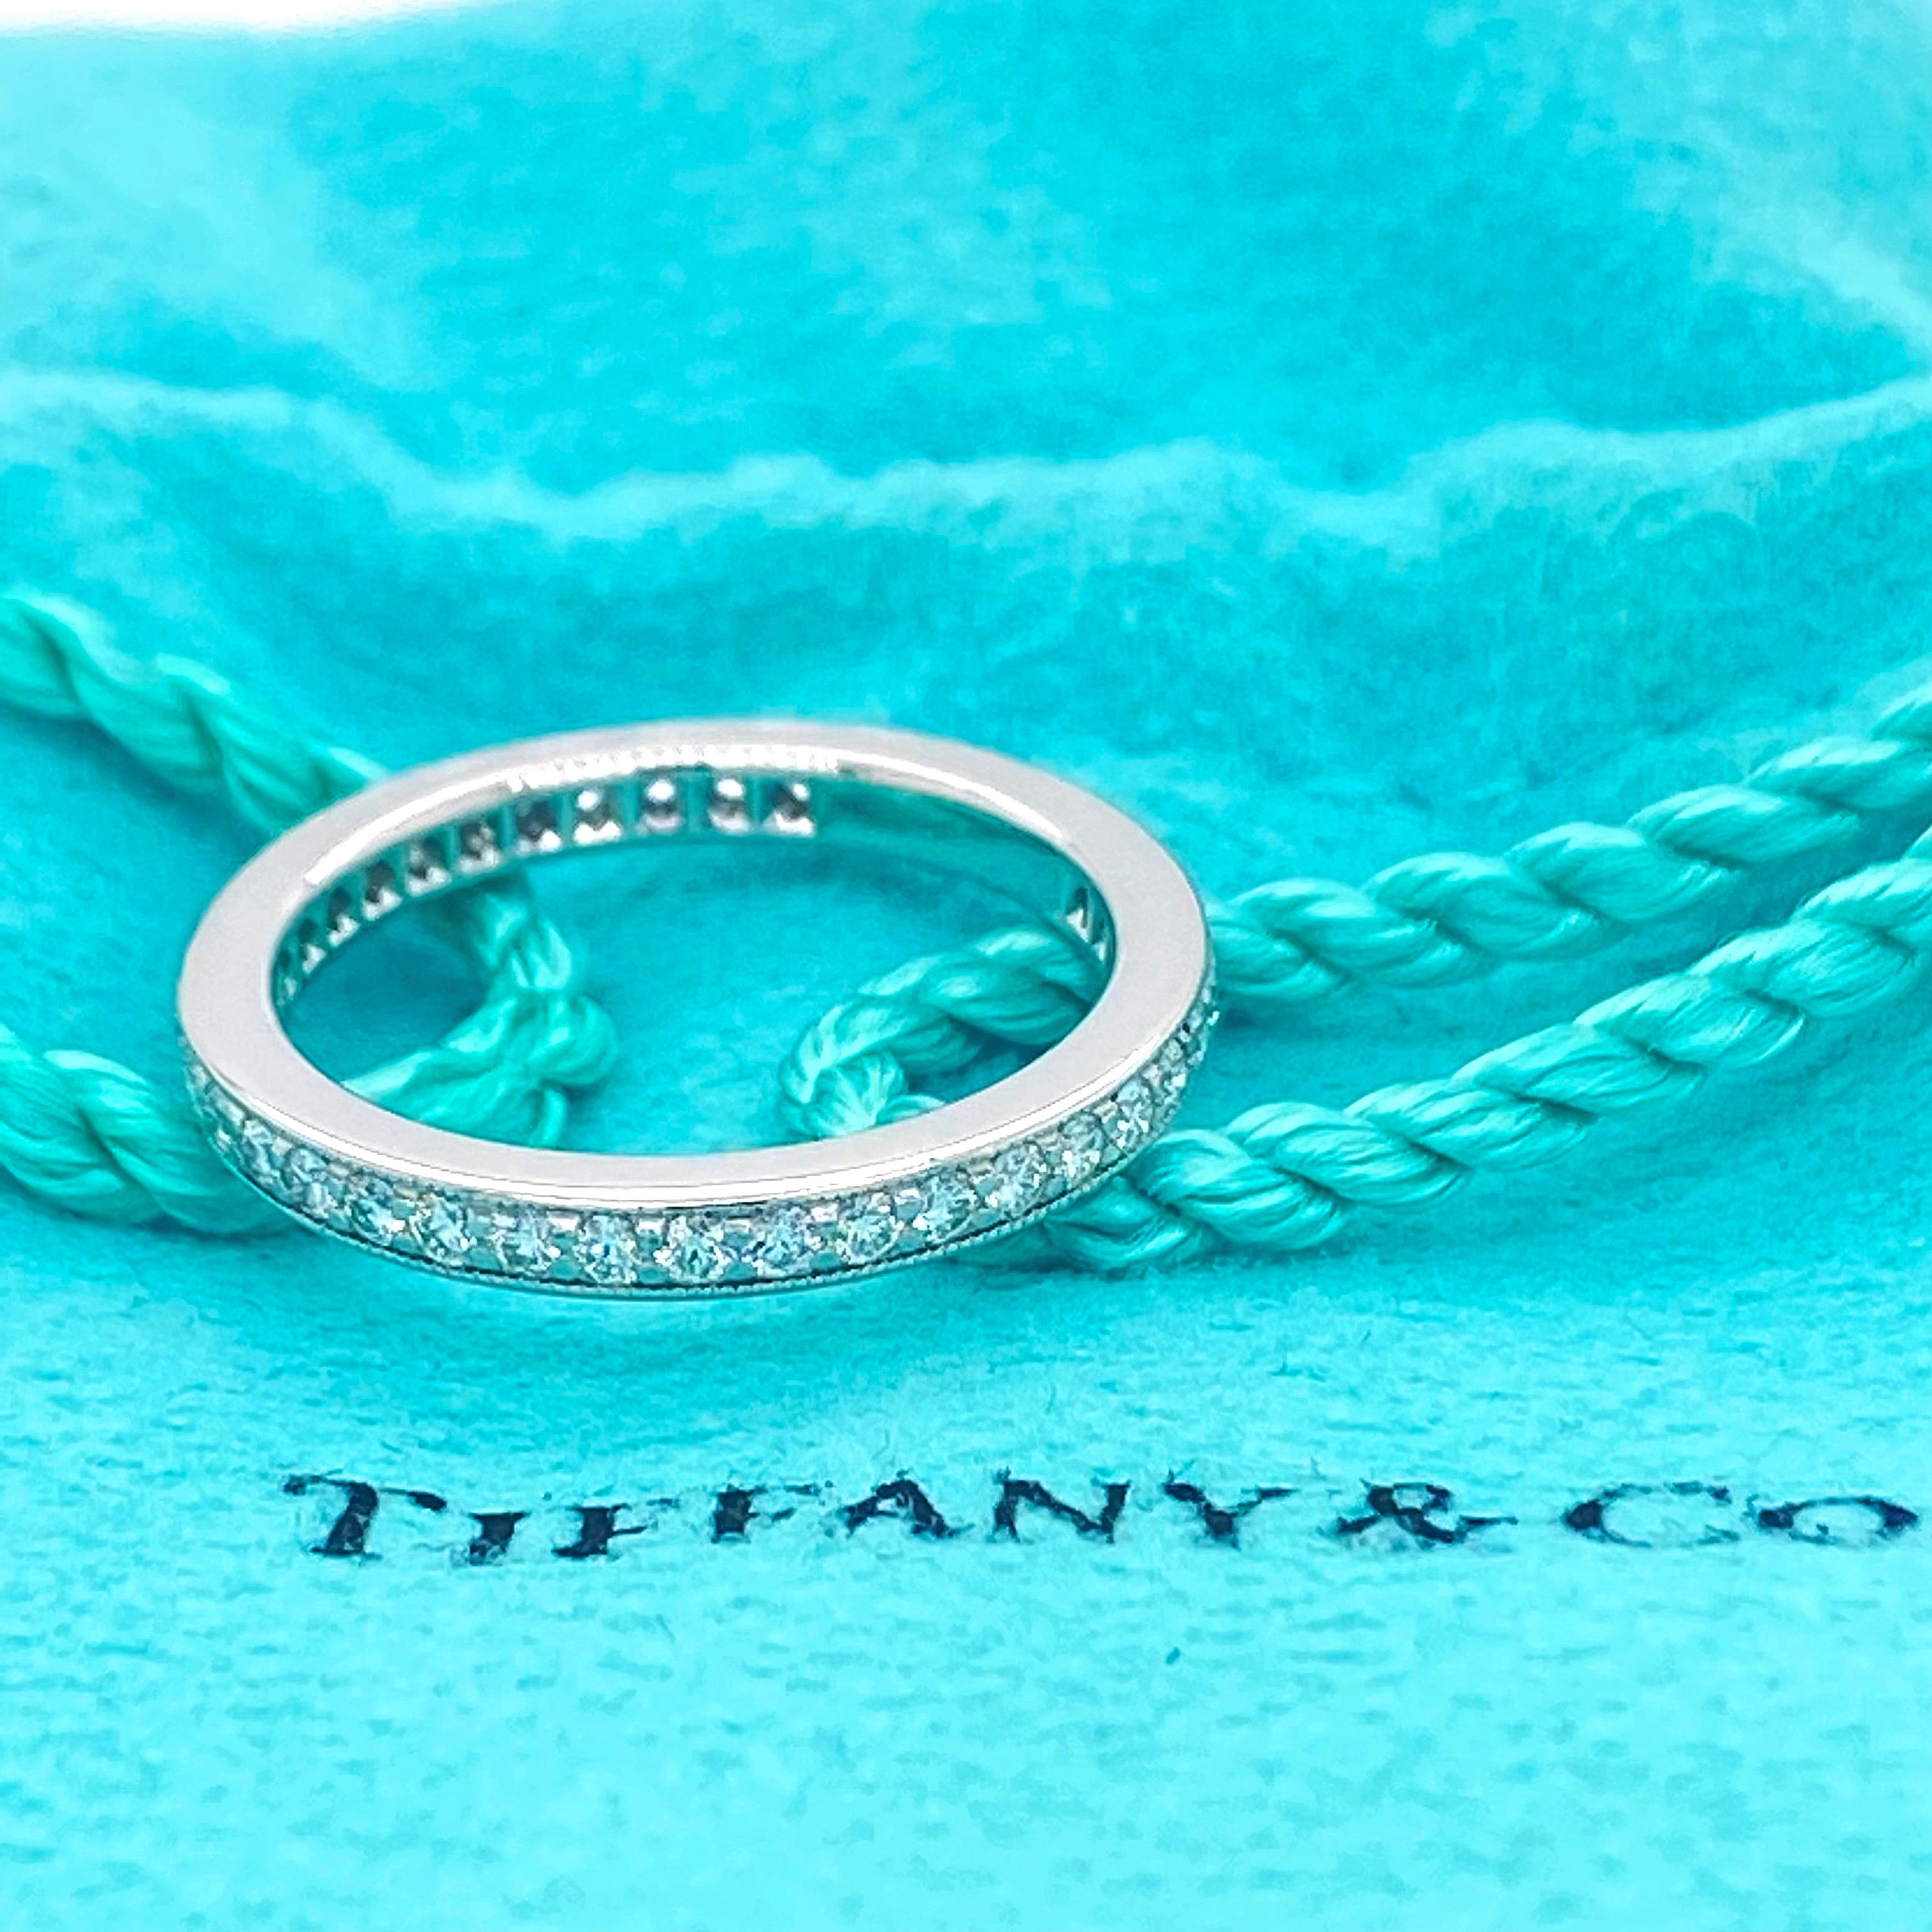 Tiffany & Co Legacy Collection Full Circle Band Ring
Style:  Full-Circle Bead-Set with Milgrain Edge
Metal:   Platinum PT950
Size: 5
Measurements:  2 MM Width
TCW:  0.43 tcw
Main Diamond:  Round Brilliant Diamonds
Color & Clarity:  G, VVS
Hallmark: 